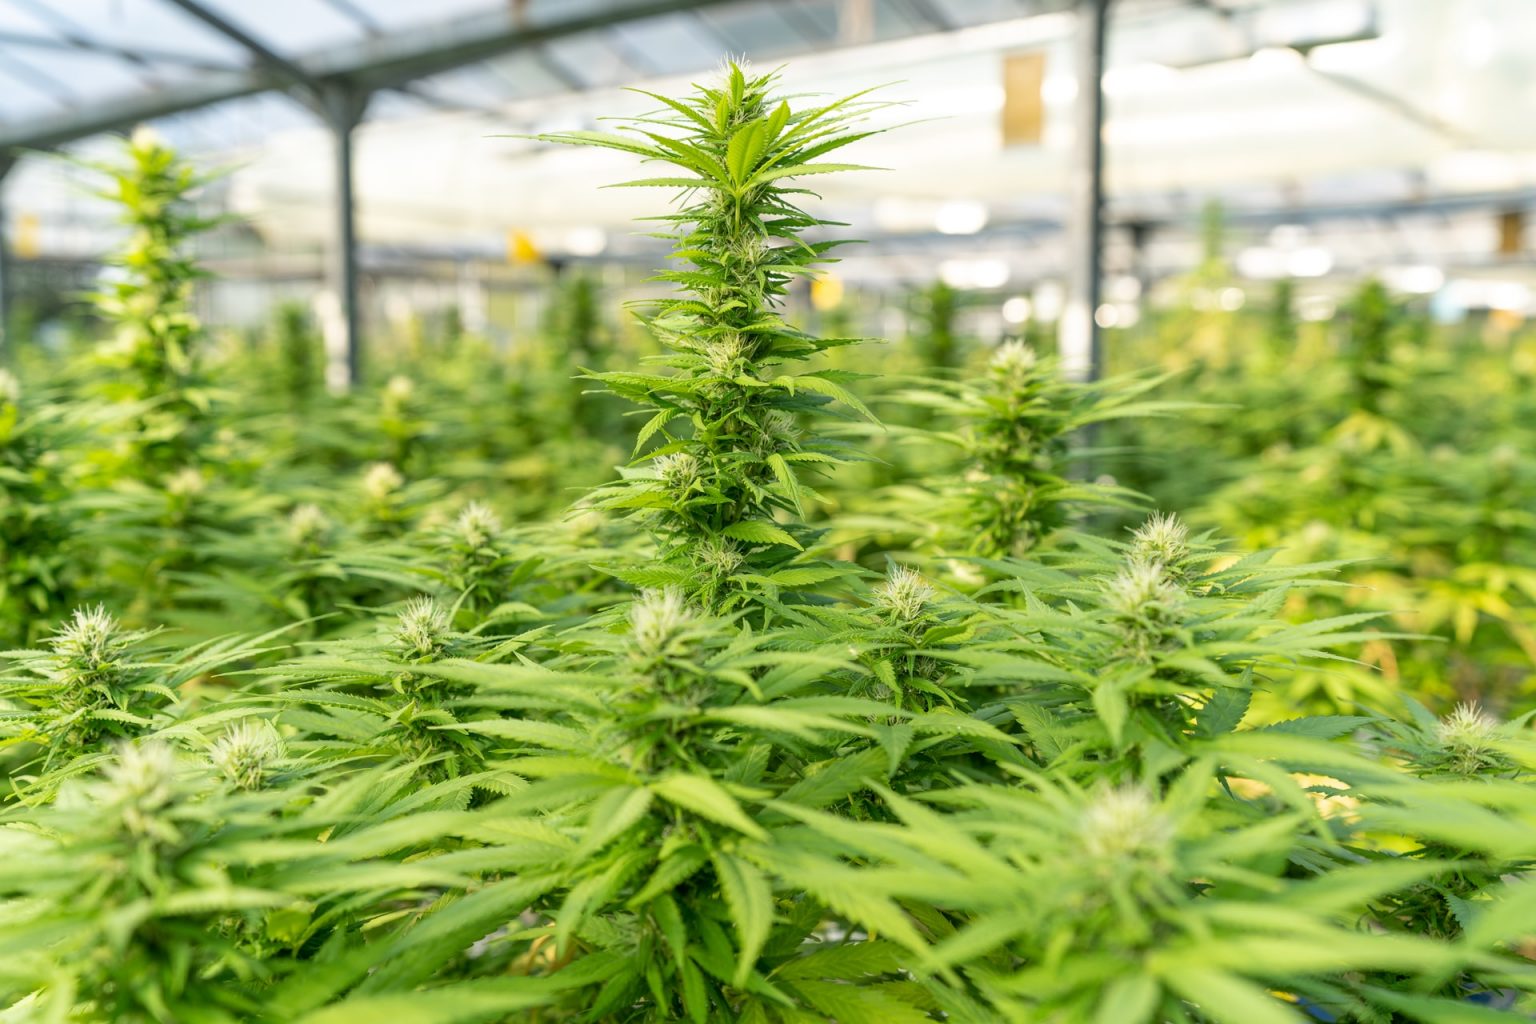 There Are Now Multiple Marijuana Legalization Bills in North Carolina